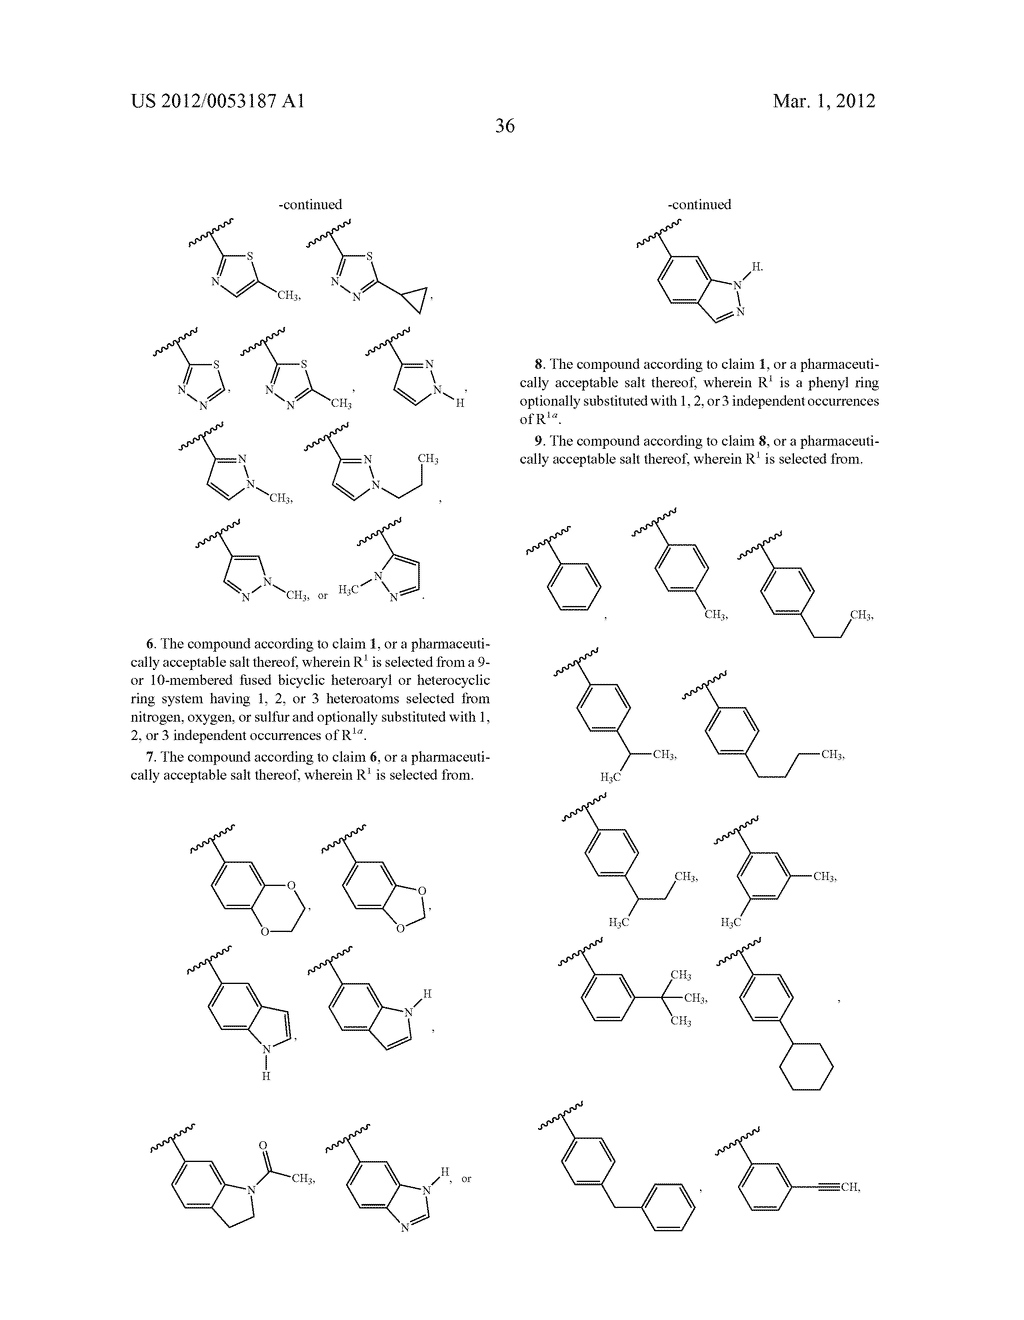 TRI-CYCLIC PYRAZOLOPYRIDINE KINASE INHIBITORS - diagram, schematic, and image 37